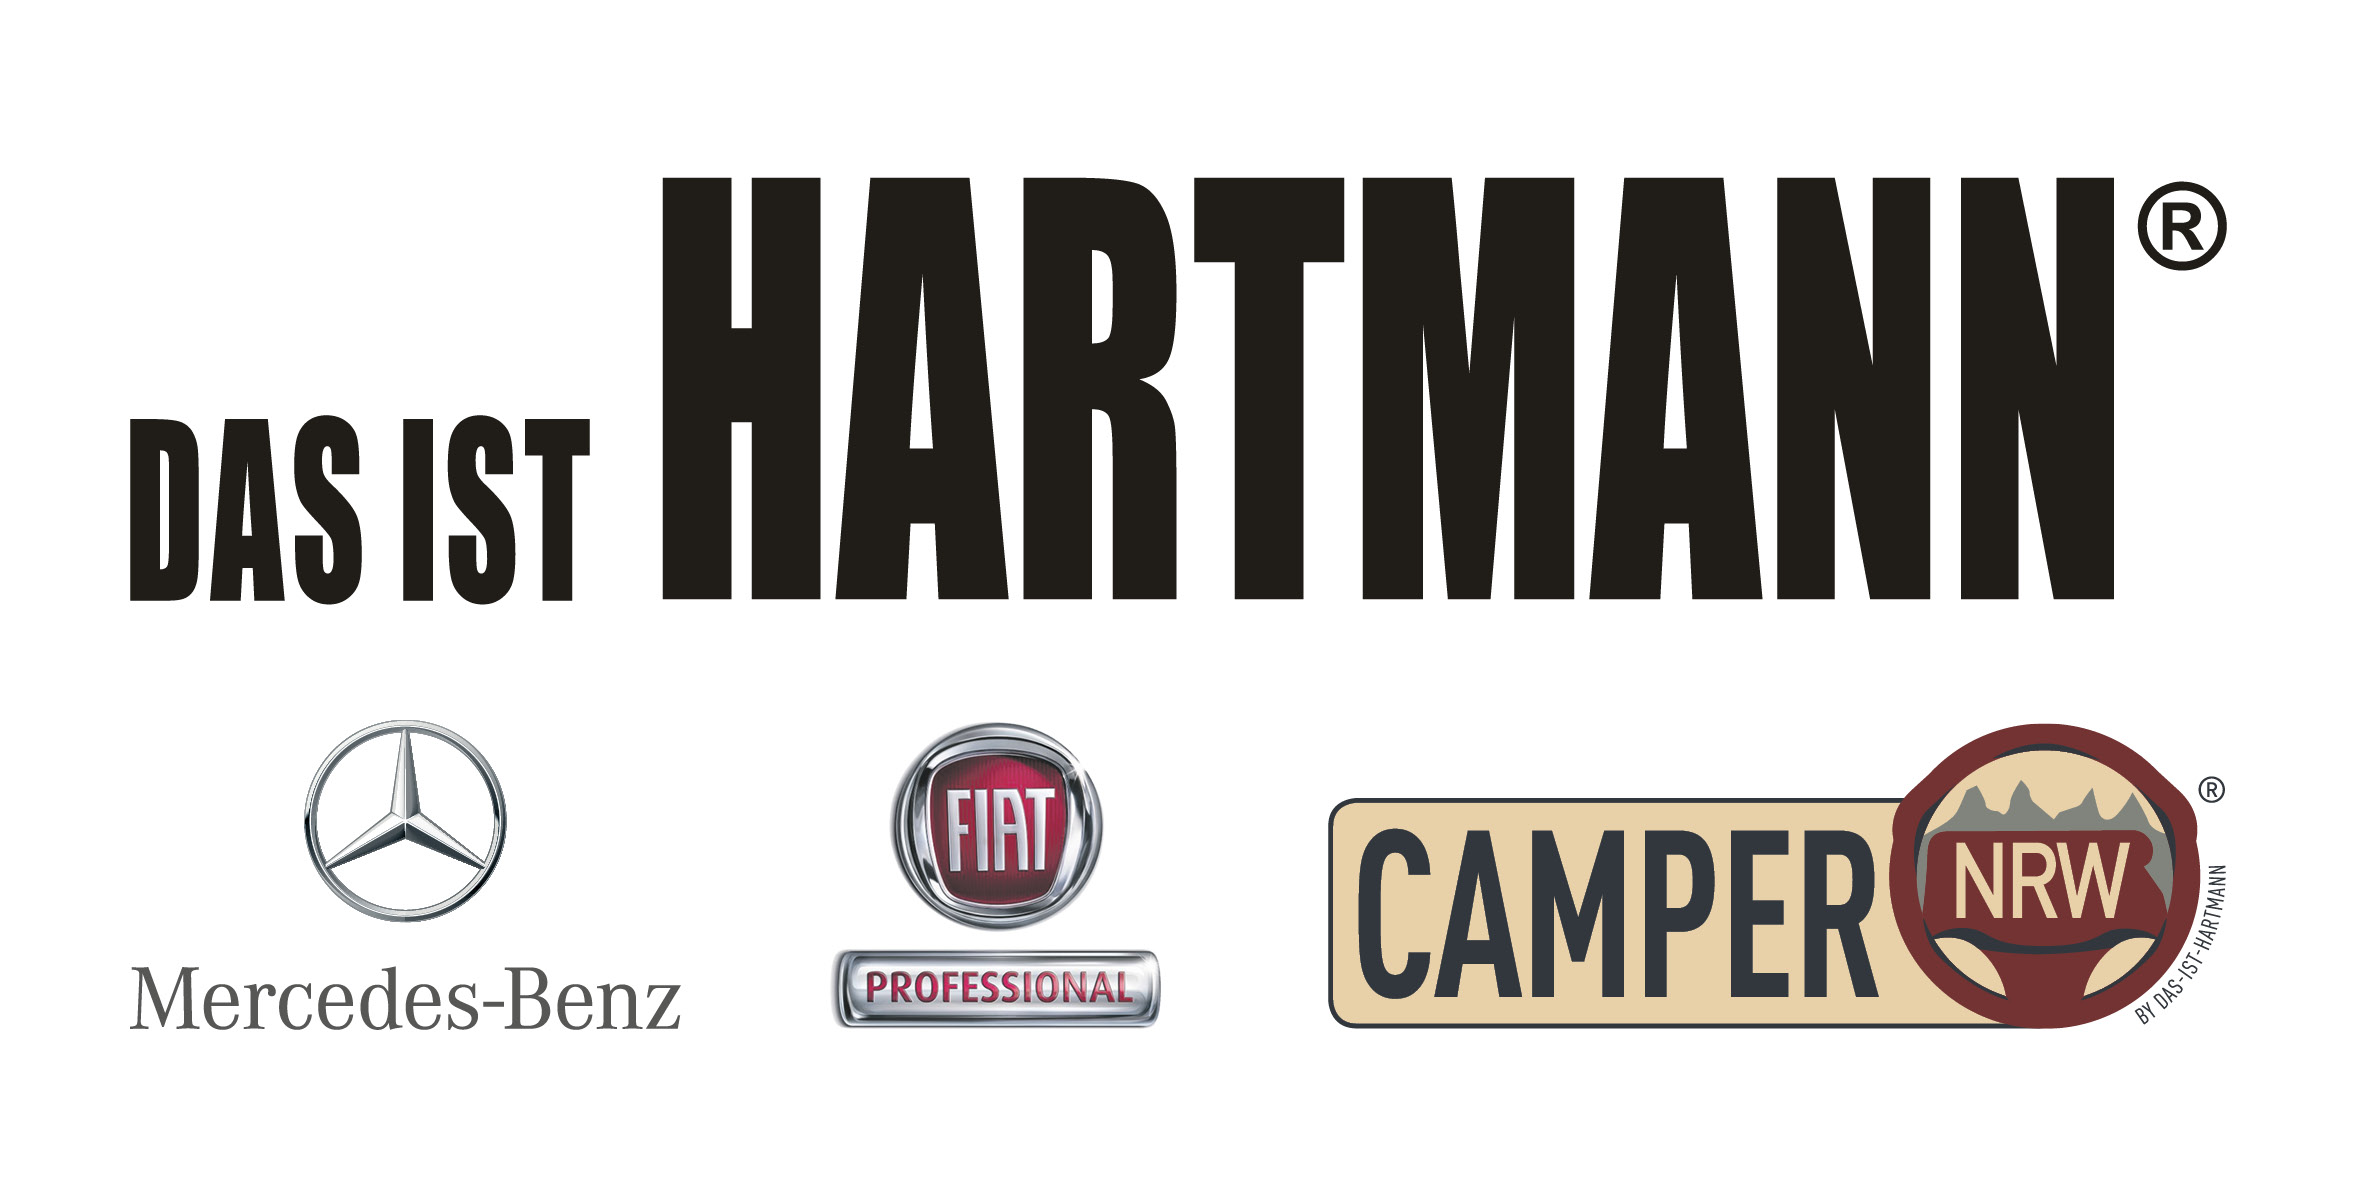 Mercedes Hartmann GmbH